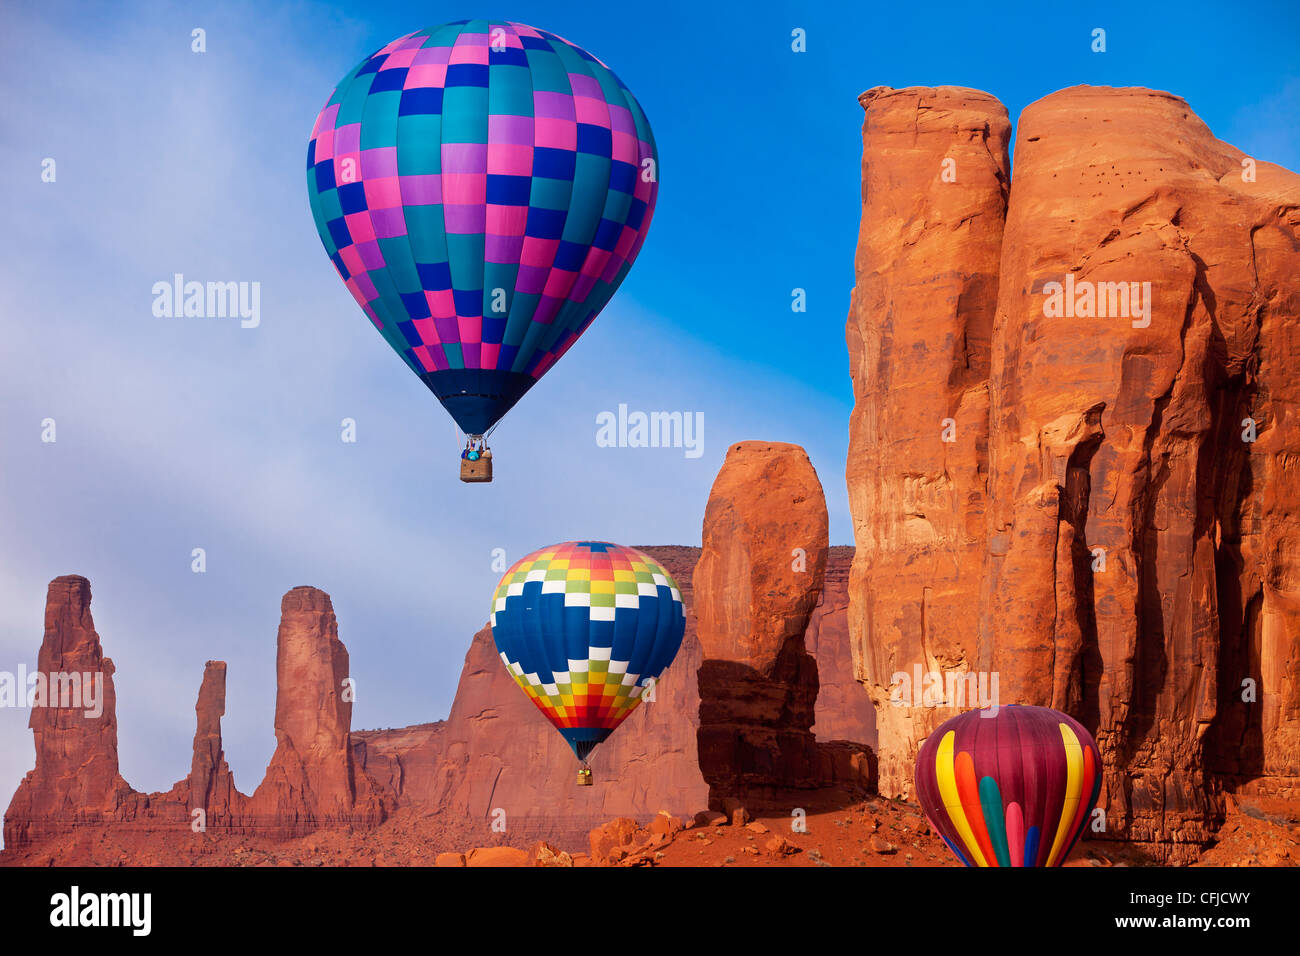 Hot air balloon festival in Monument Valley, Arizona USA Stock Photo - Alamy